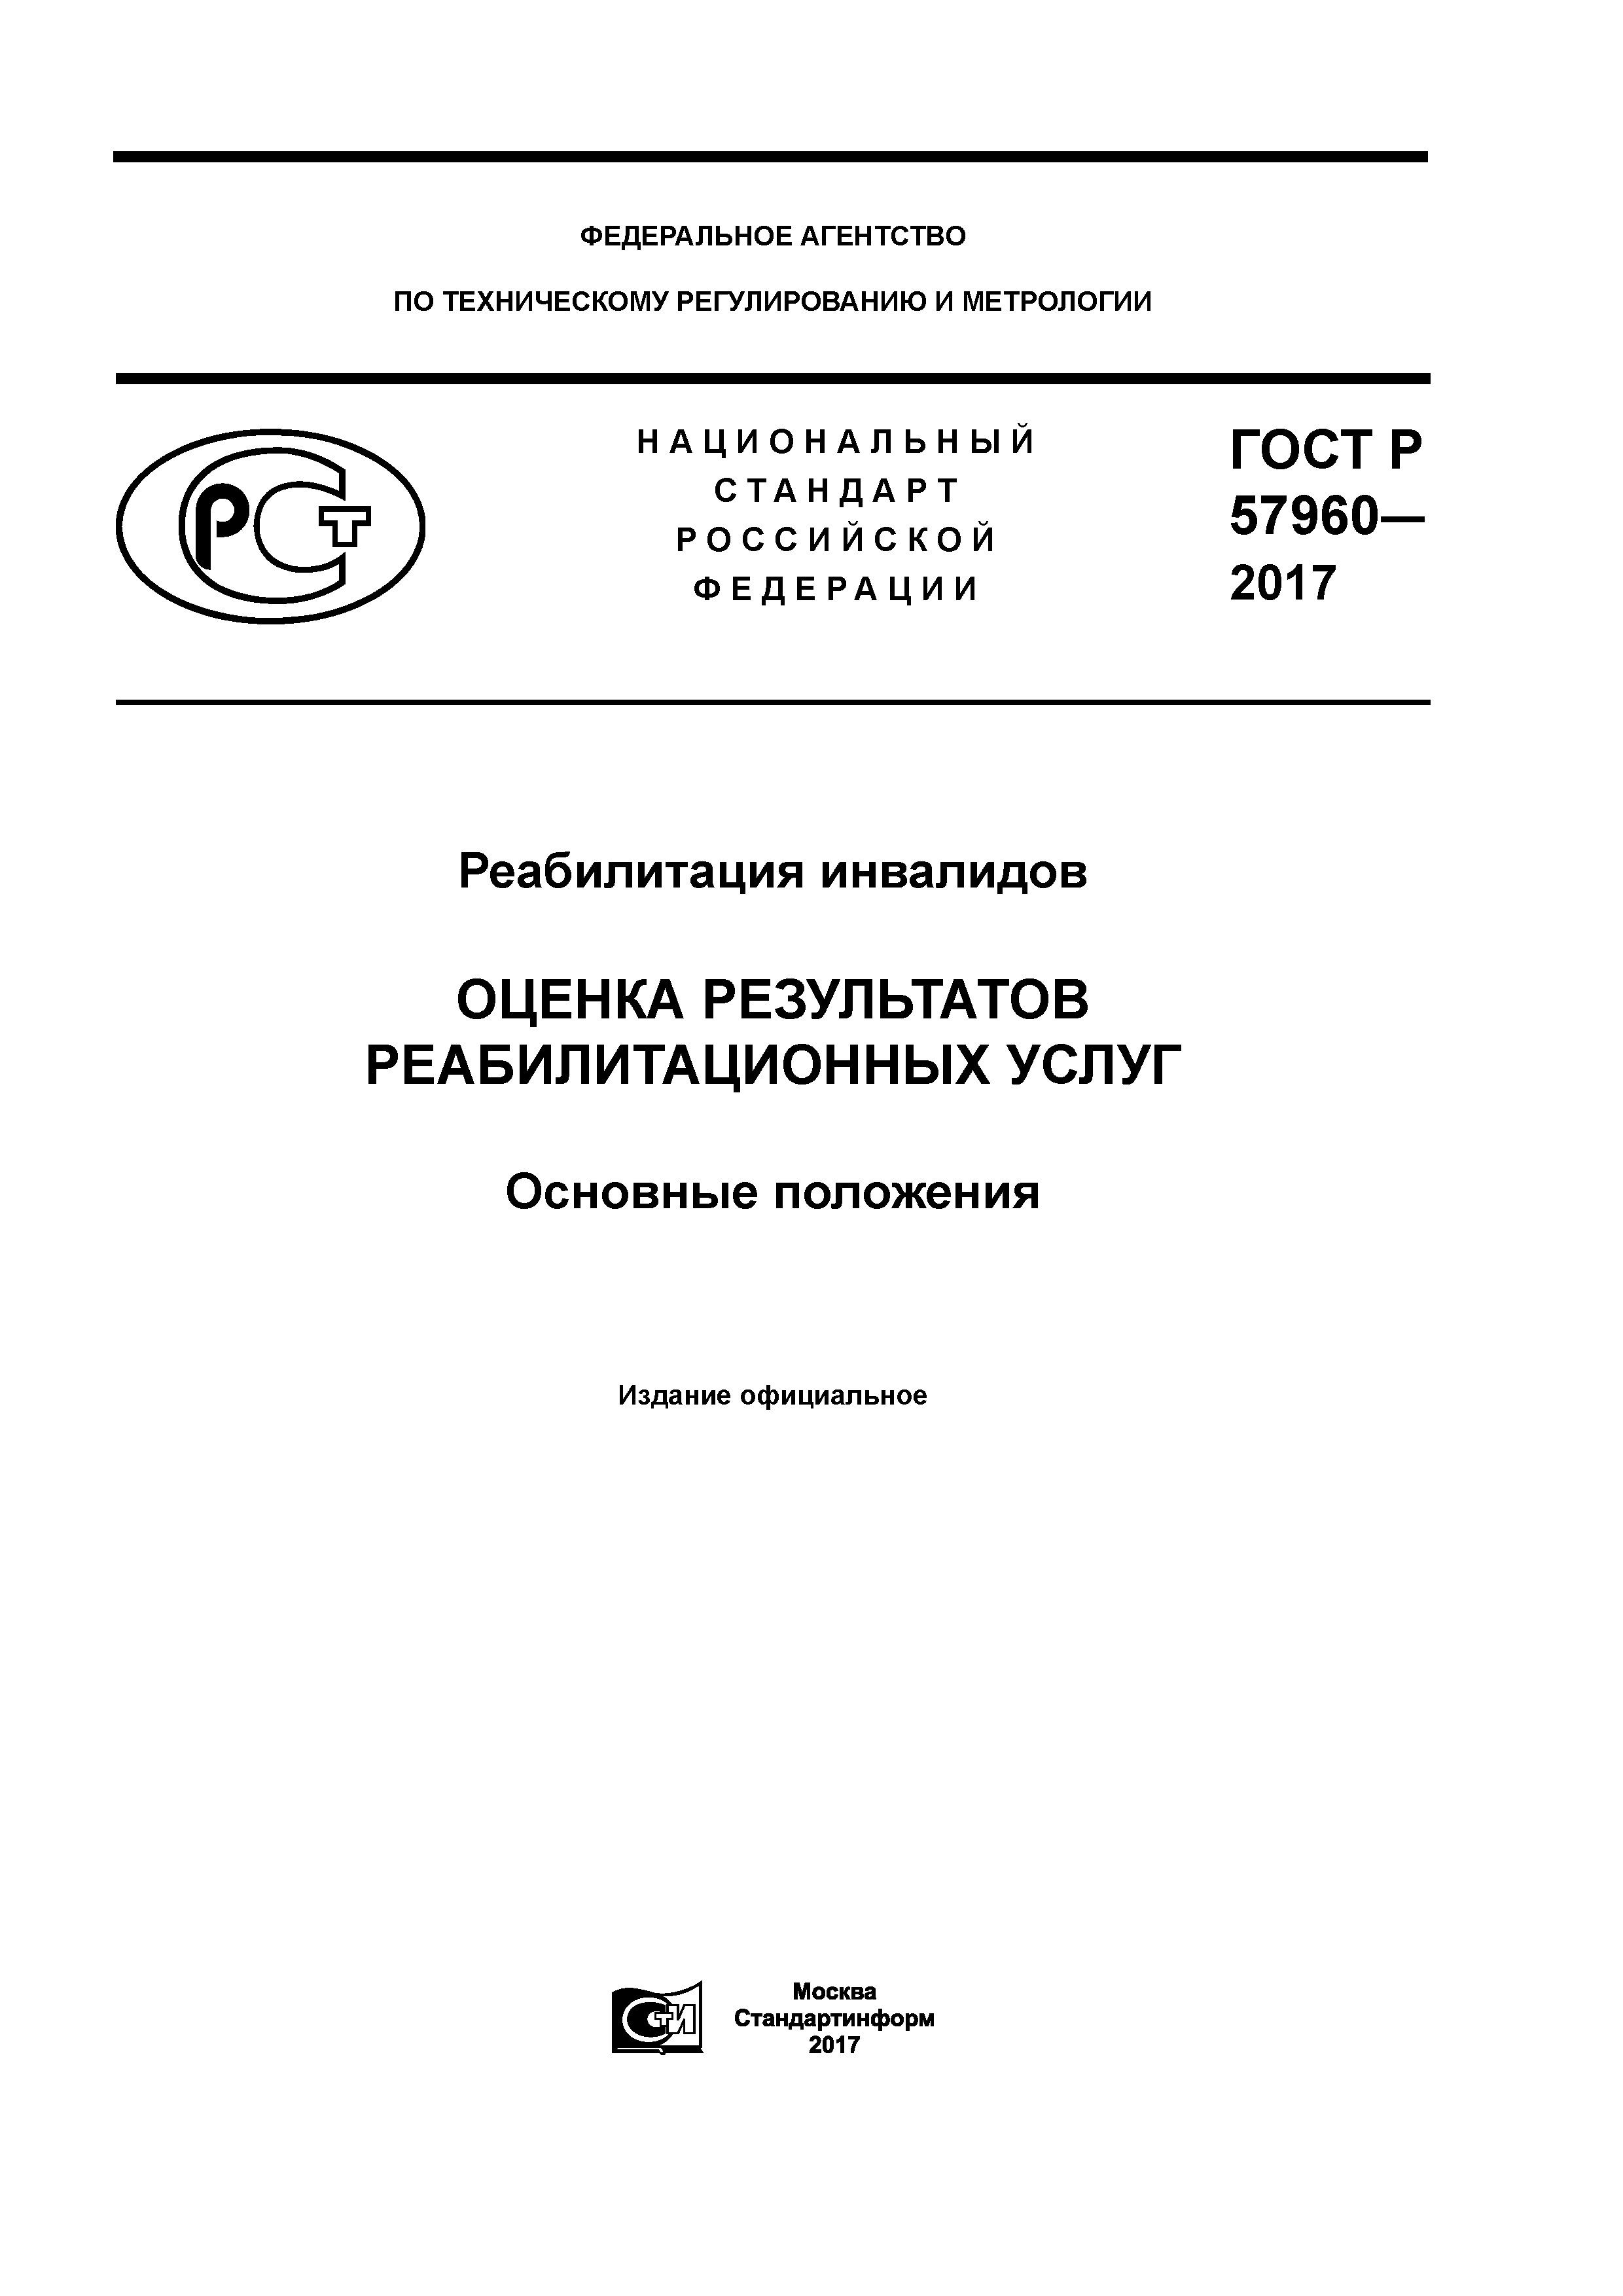 ГОСТ Р 57960-2017